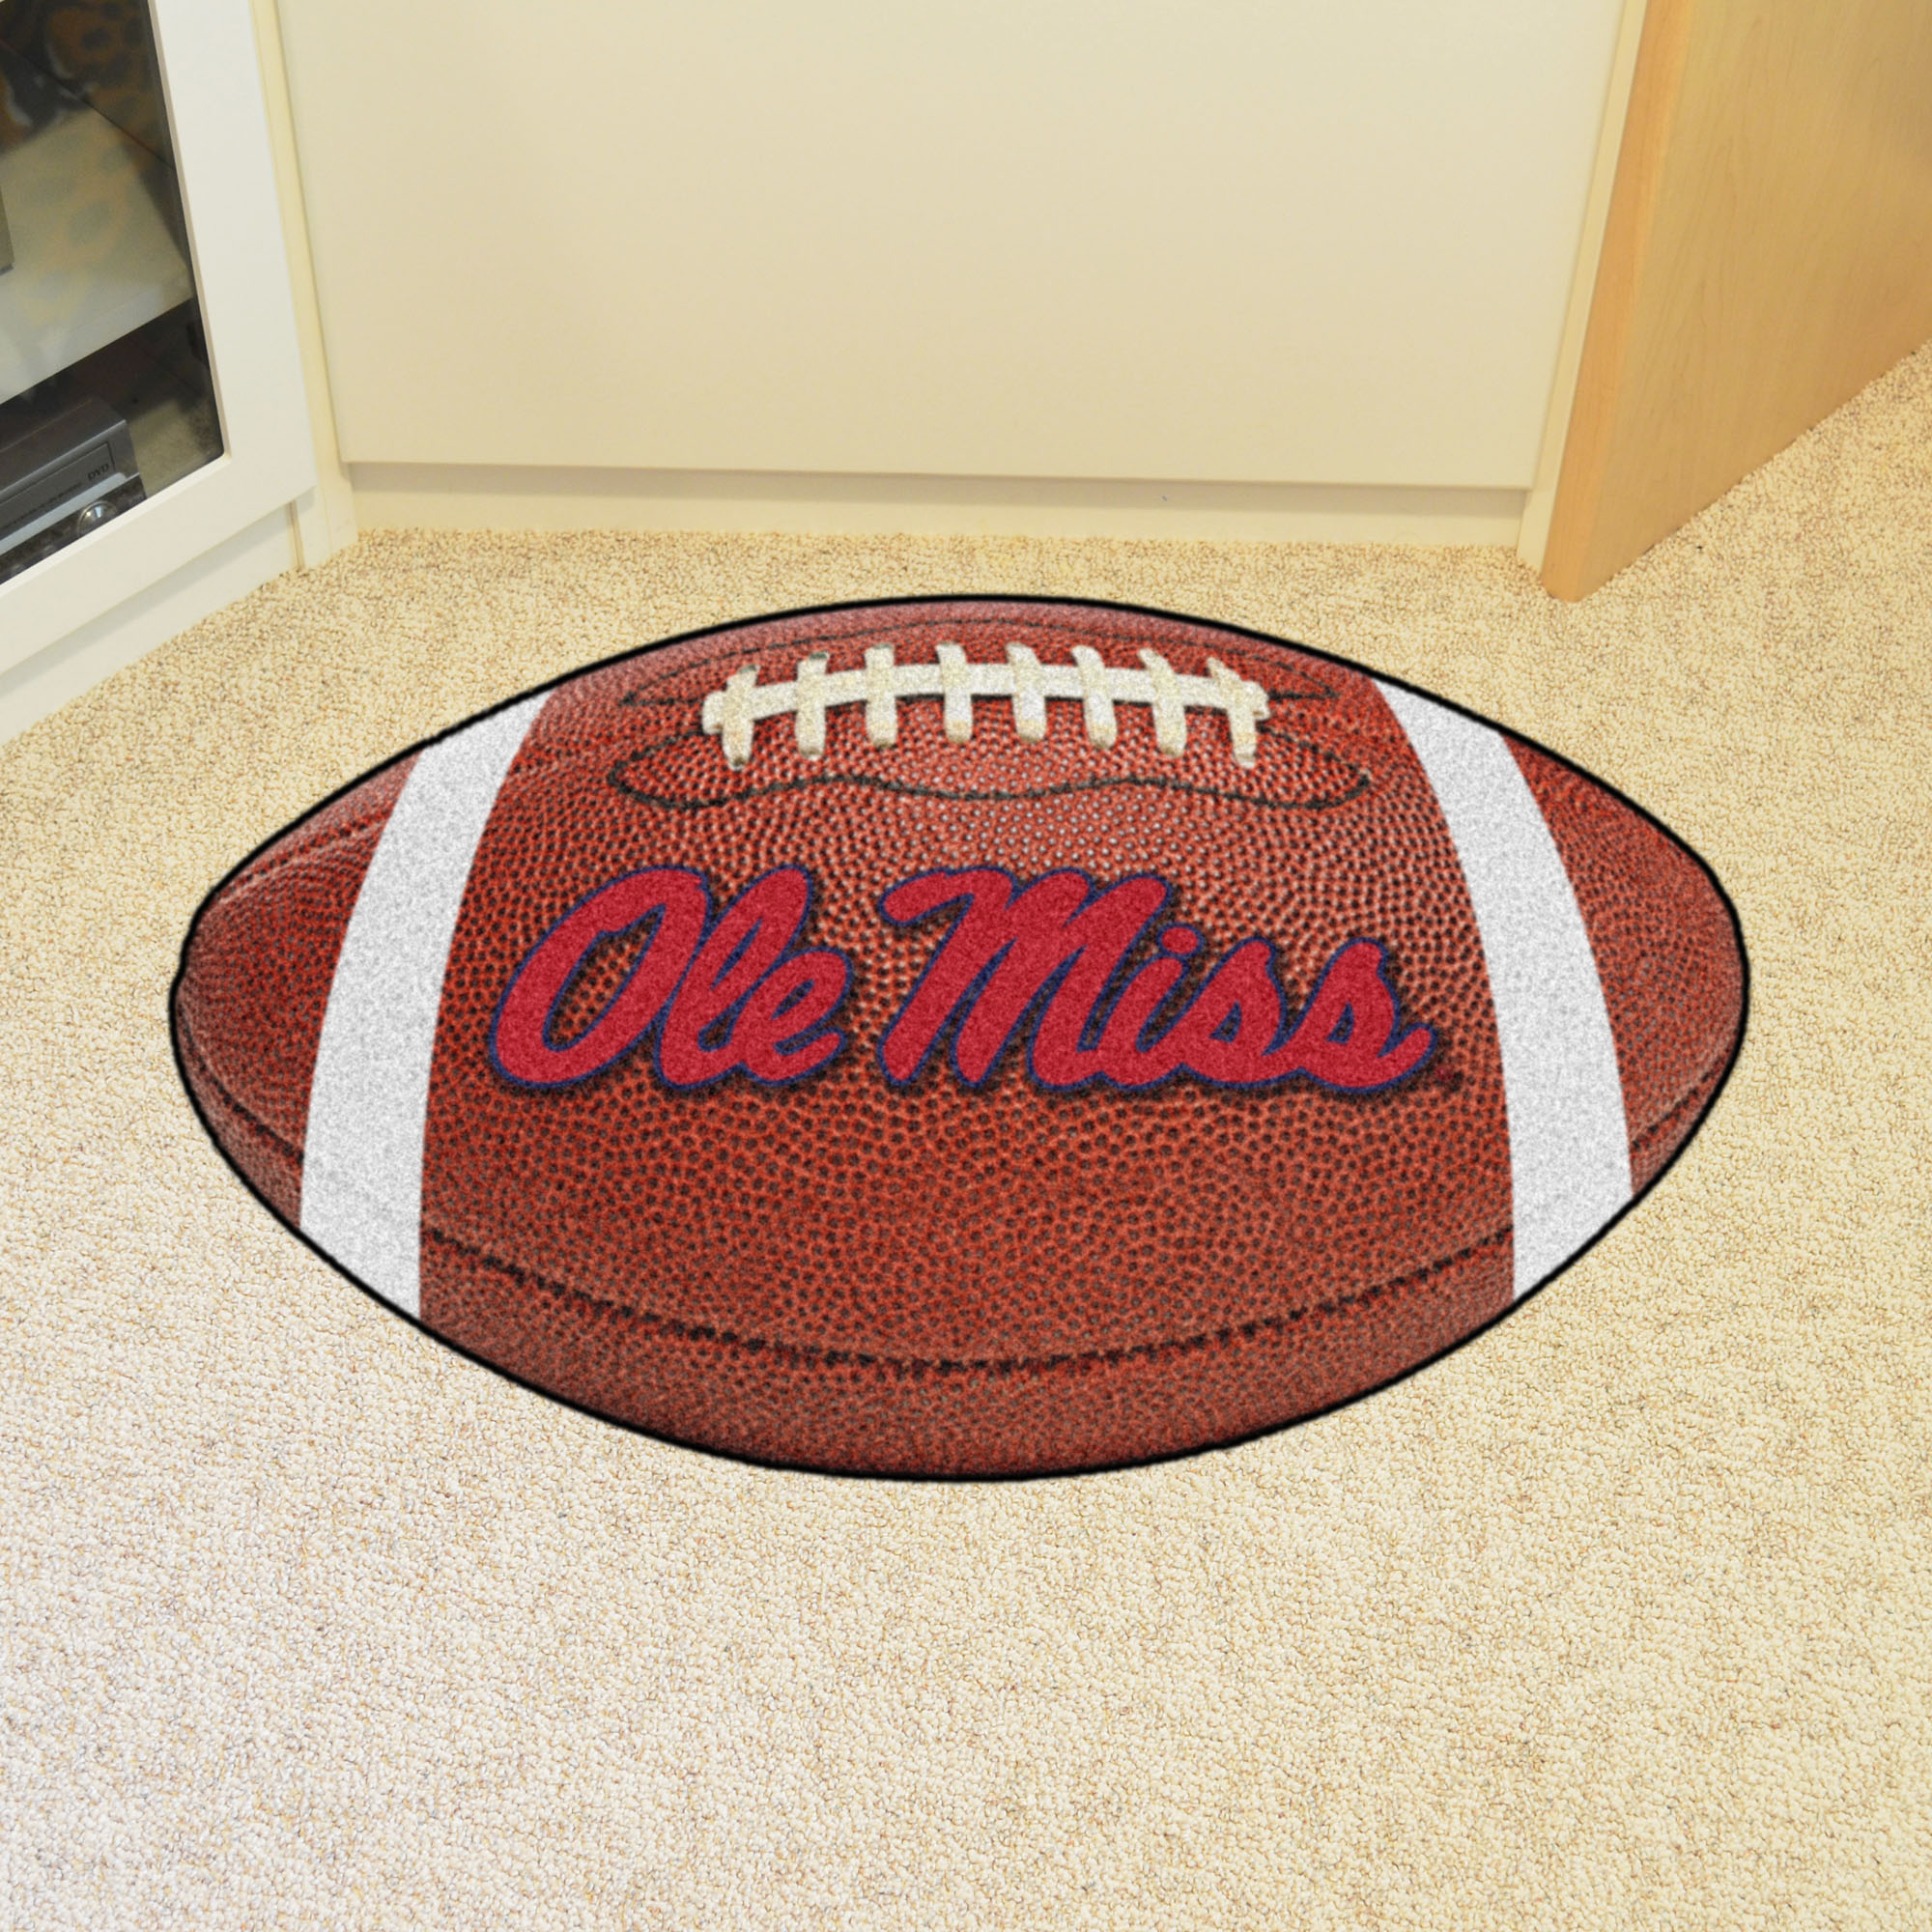 University of Mississippi Rebels Ball Shaped Area Rugs (Ball Shaped Area Rugs: Football)